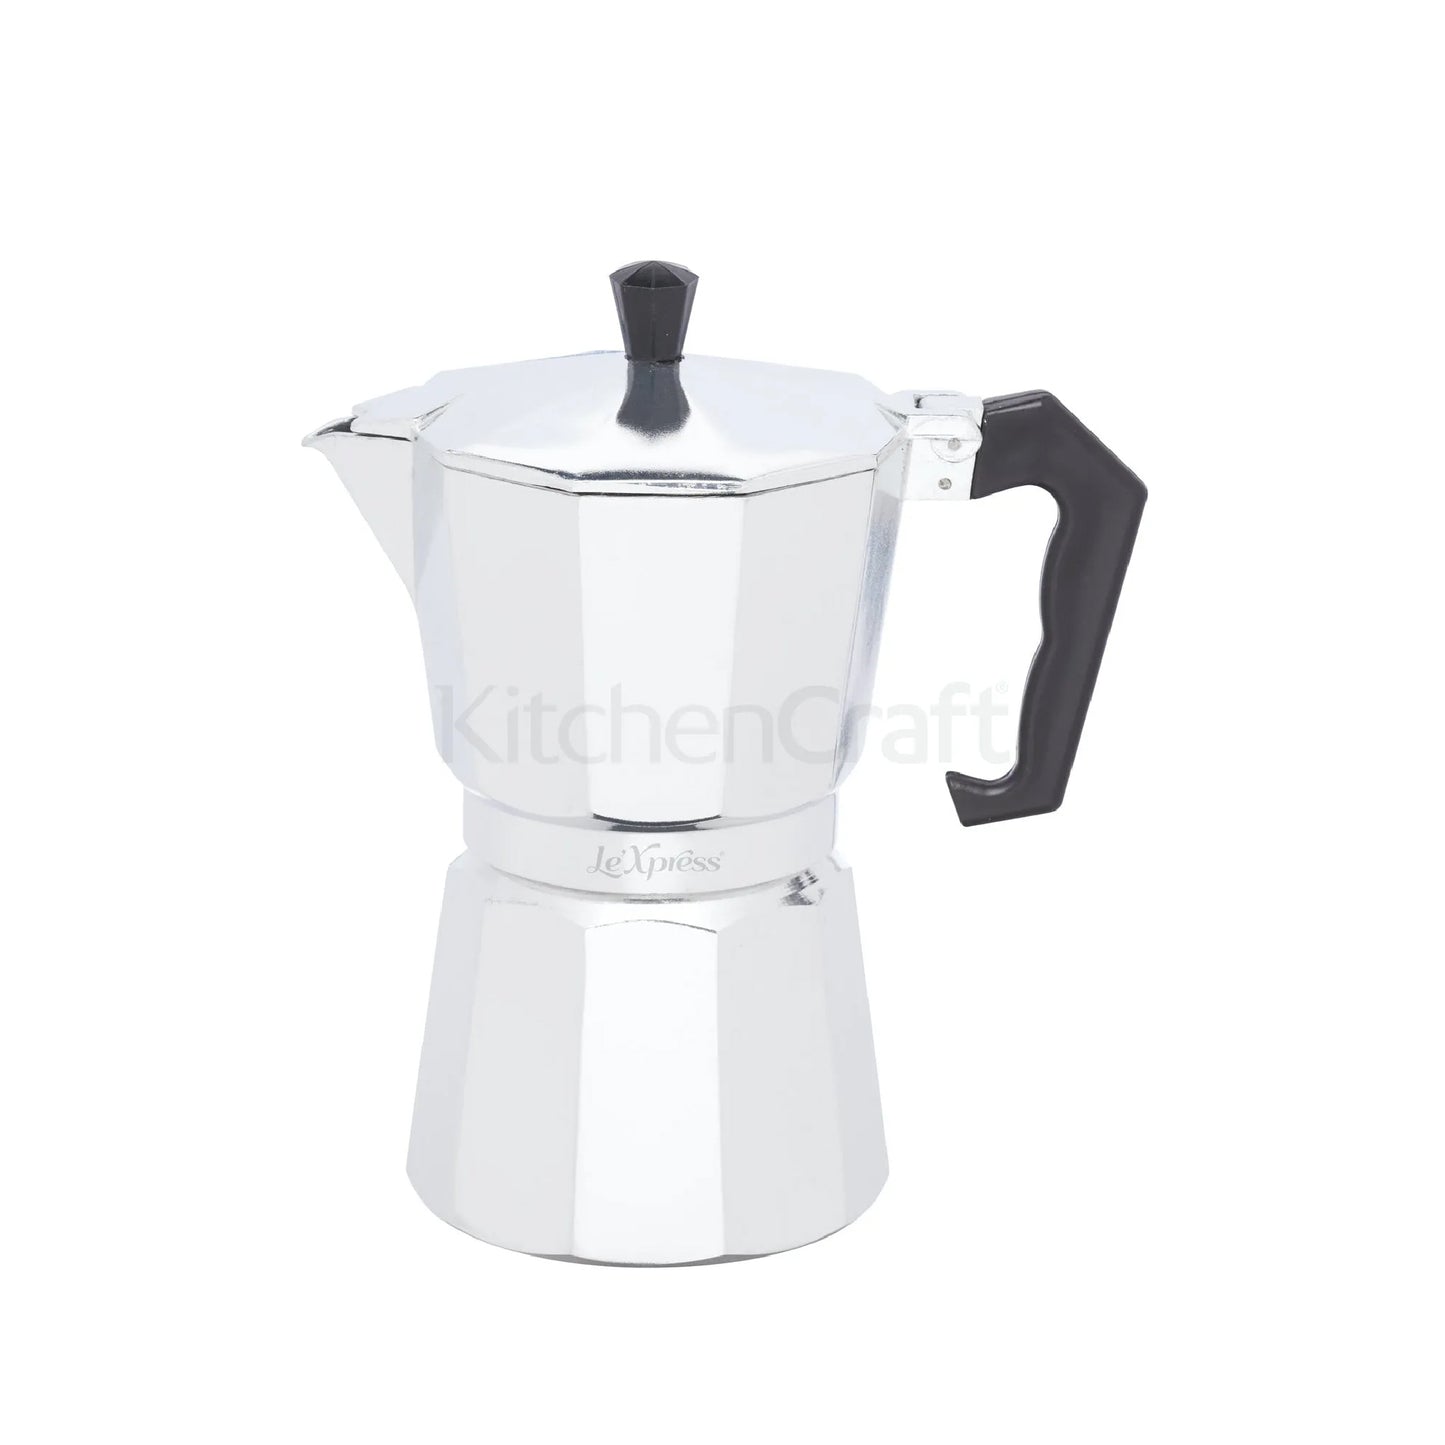 KitchenCraft Espresso Maker 6 Cups - ITAL6CUP